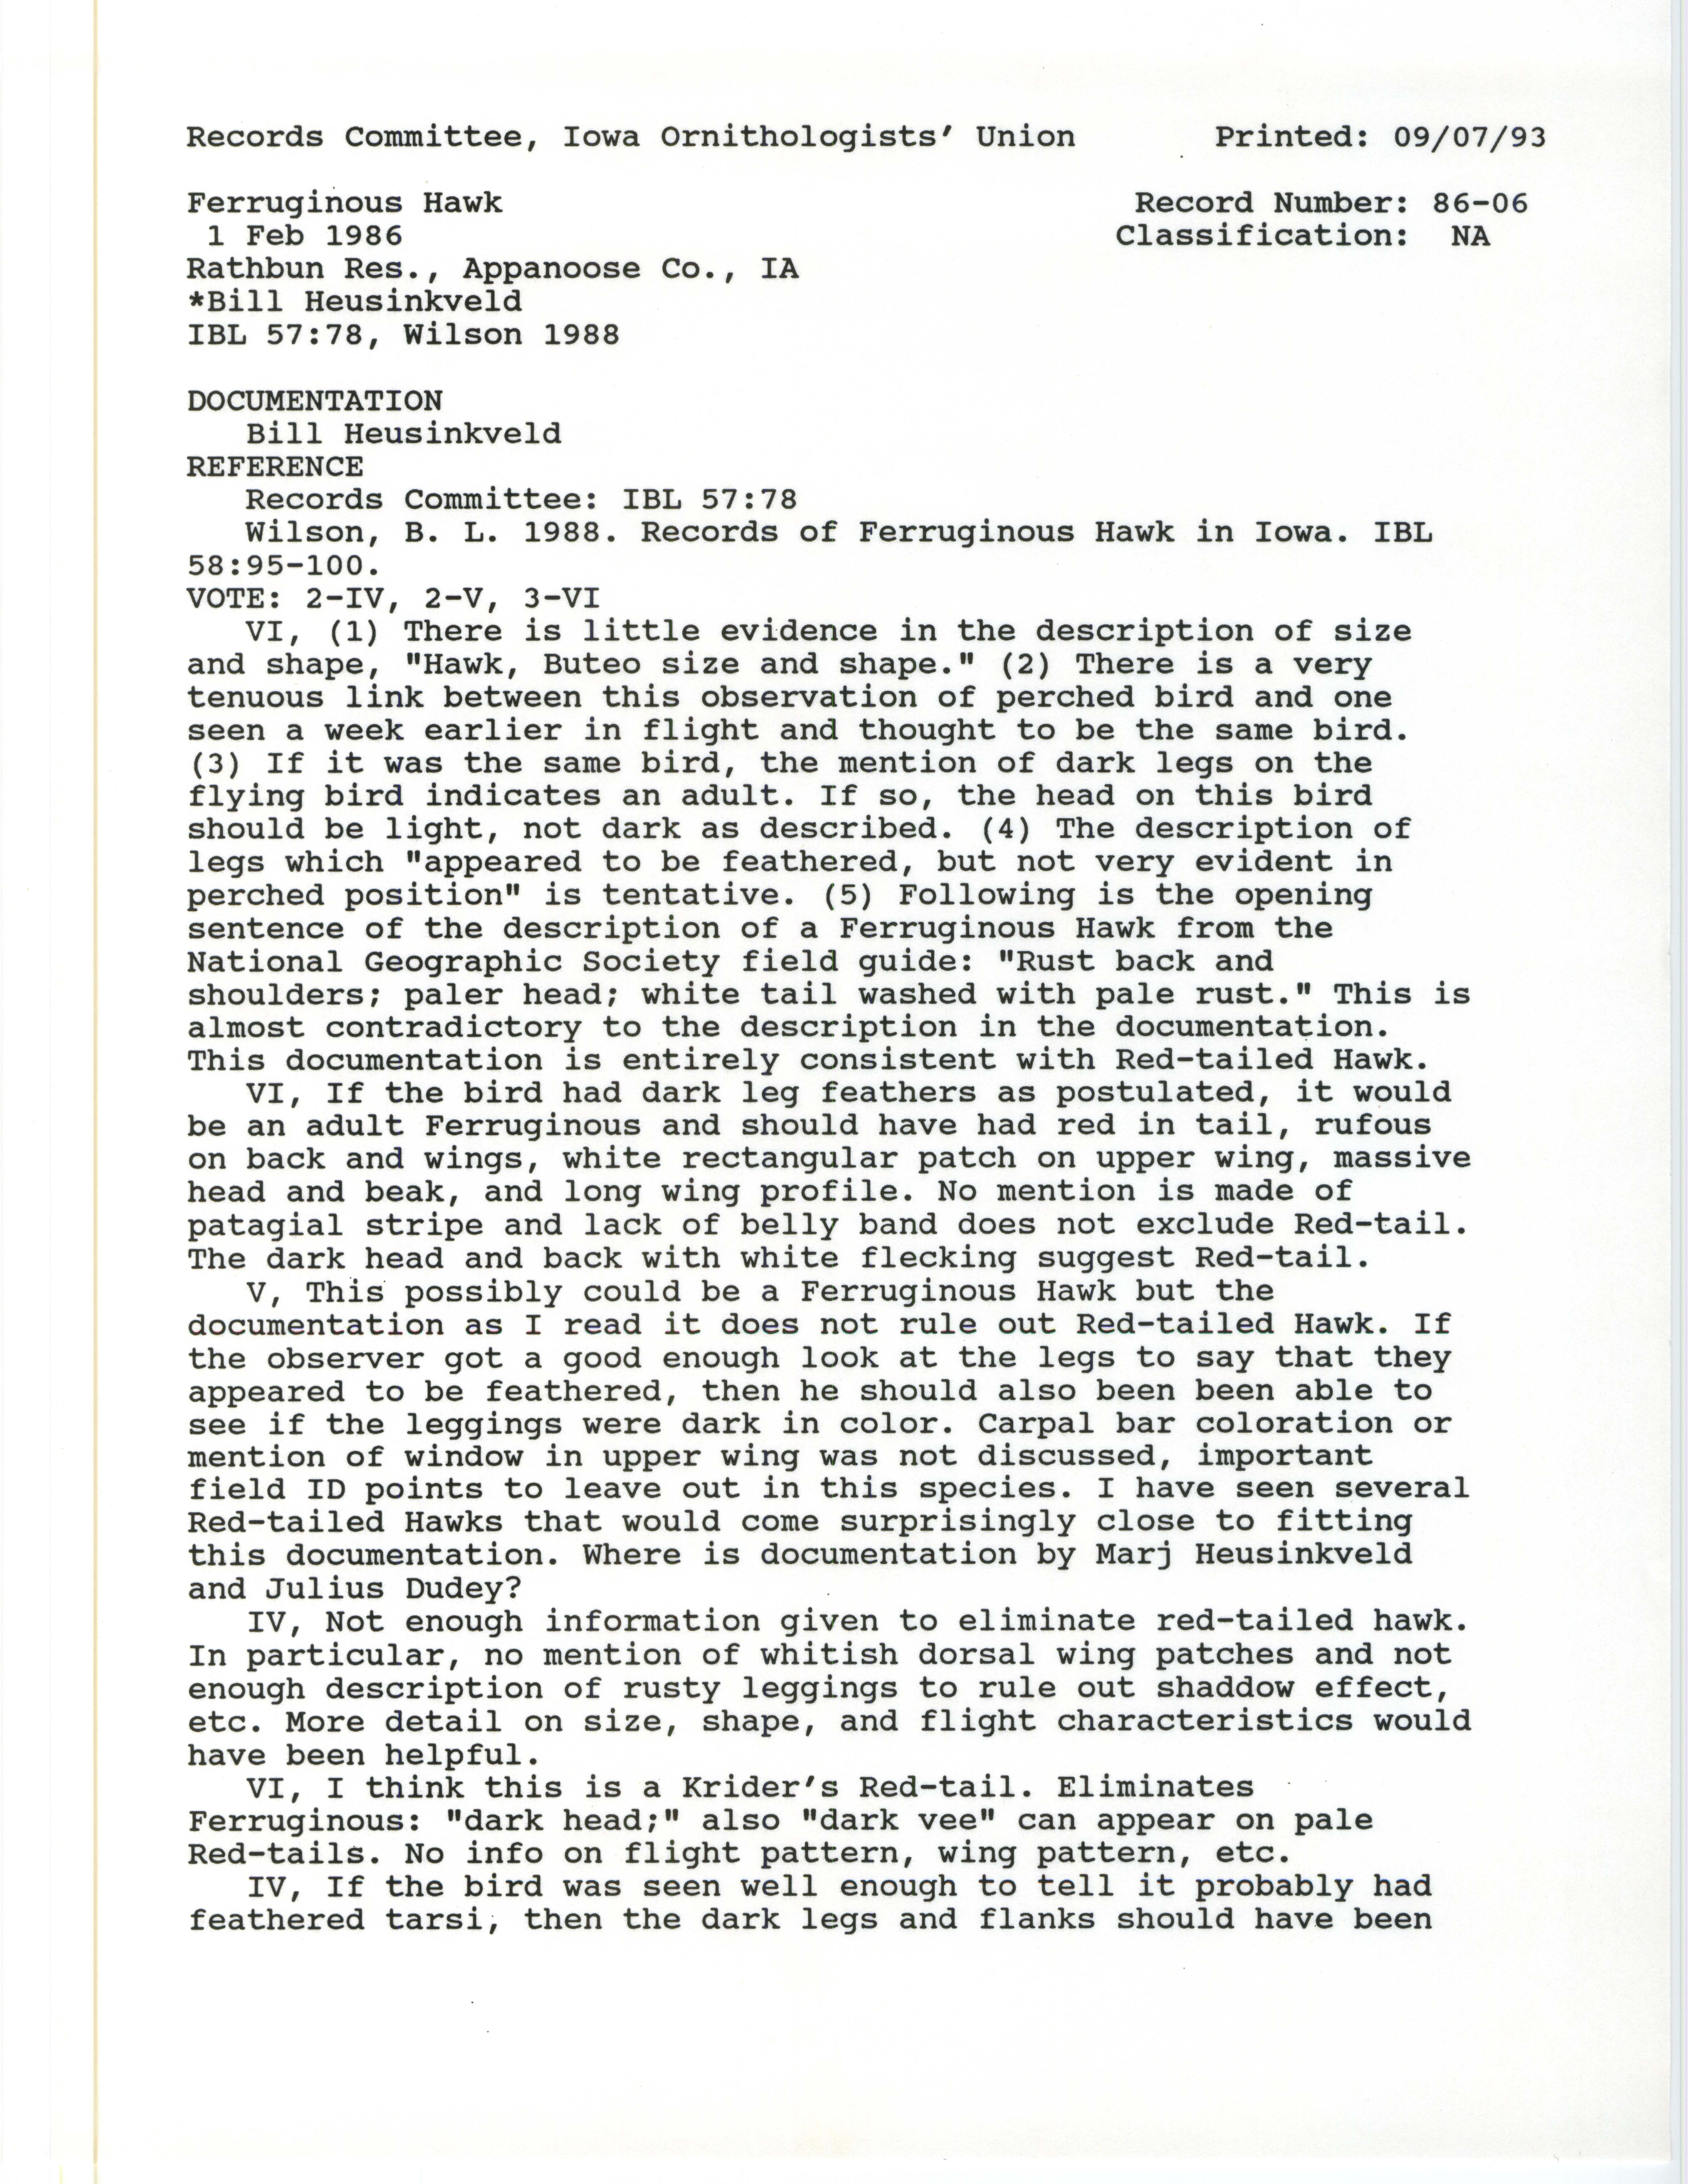 Records Committee review for rare bird sighting of Ferruginous Hawk at Rathbun Reservoir, 1986